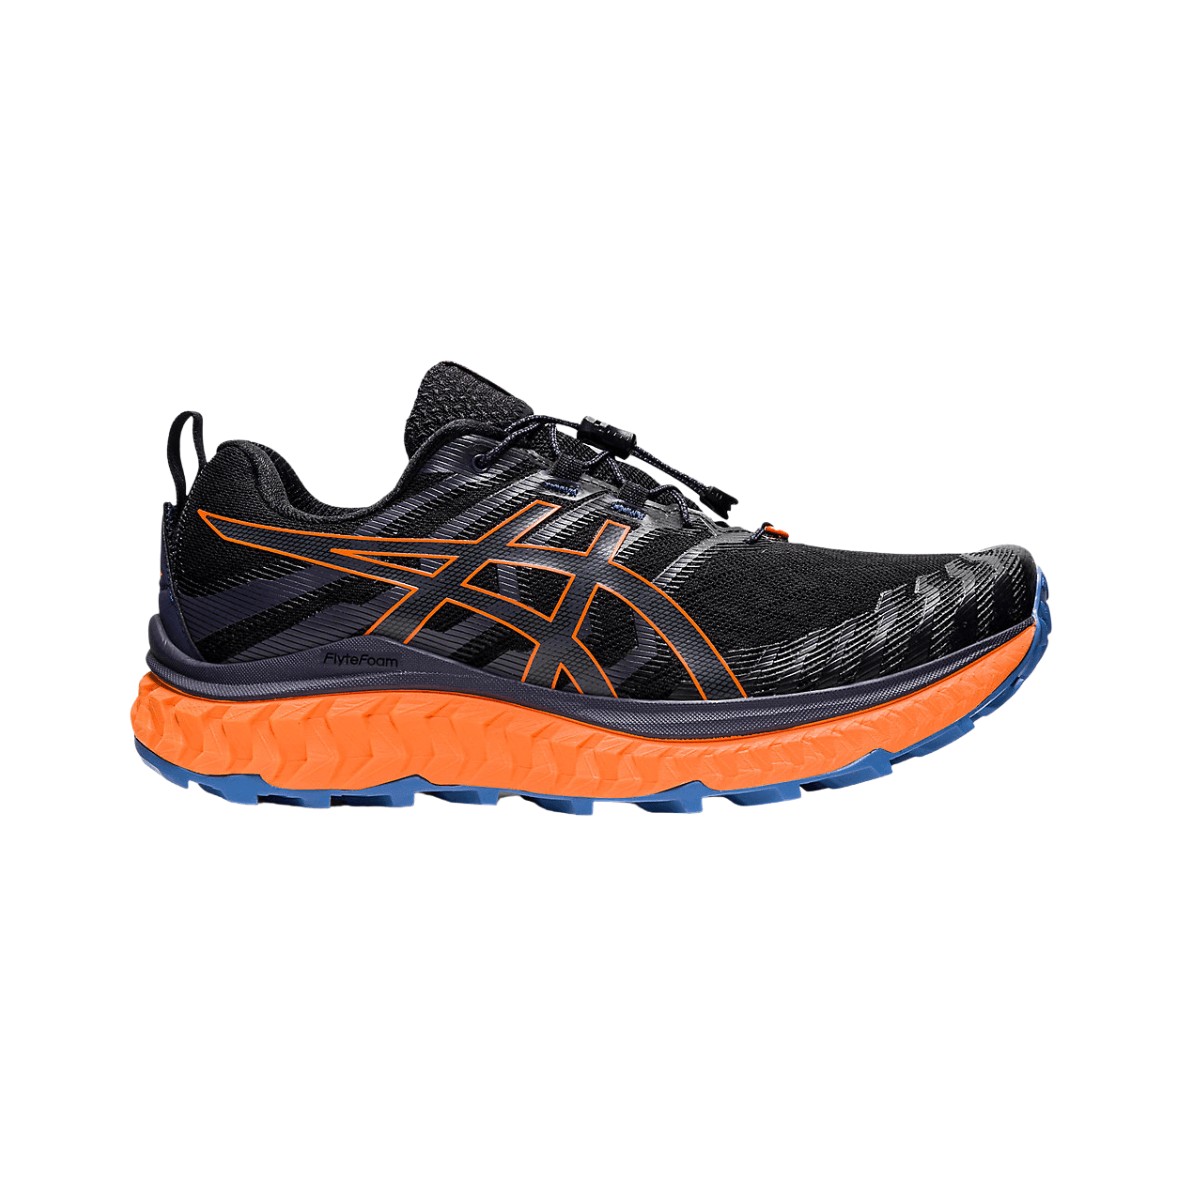 Asics Trabuco Max Black Orange Running Shoes AW22, Size 42 - EUR